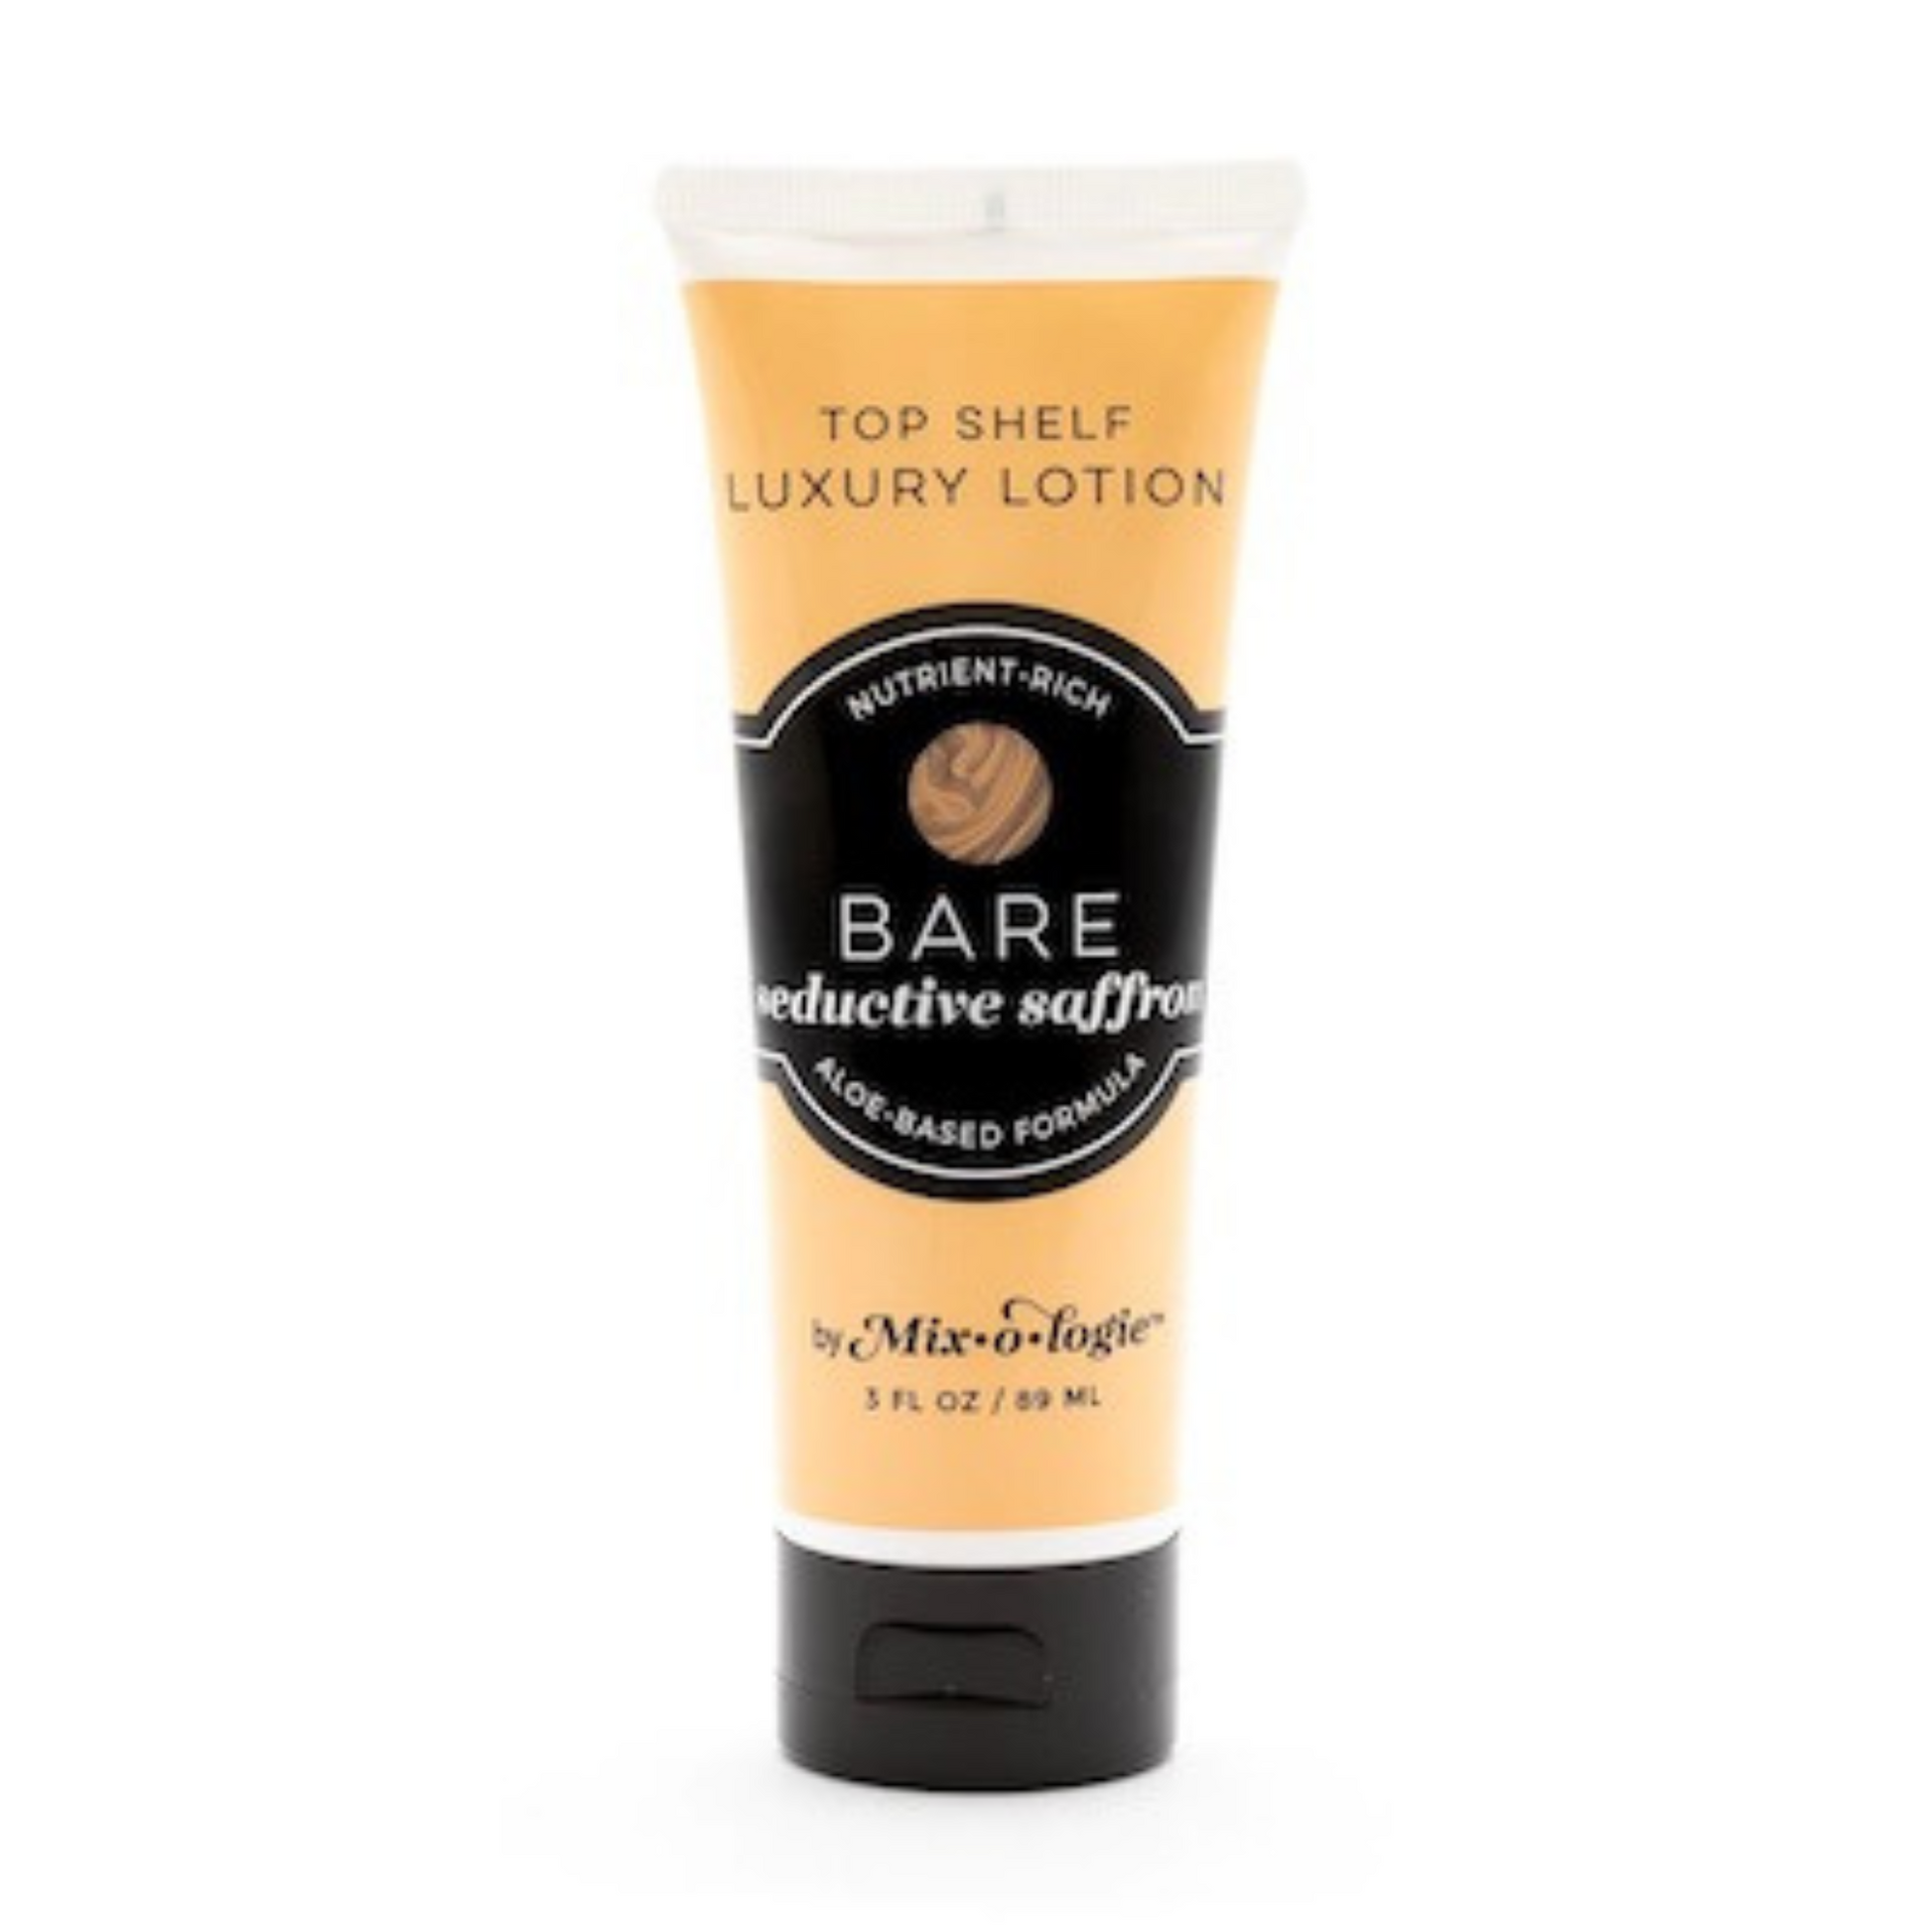 Top shelf luxury lotion in bare